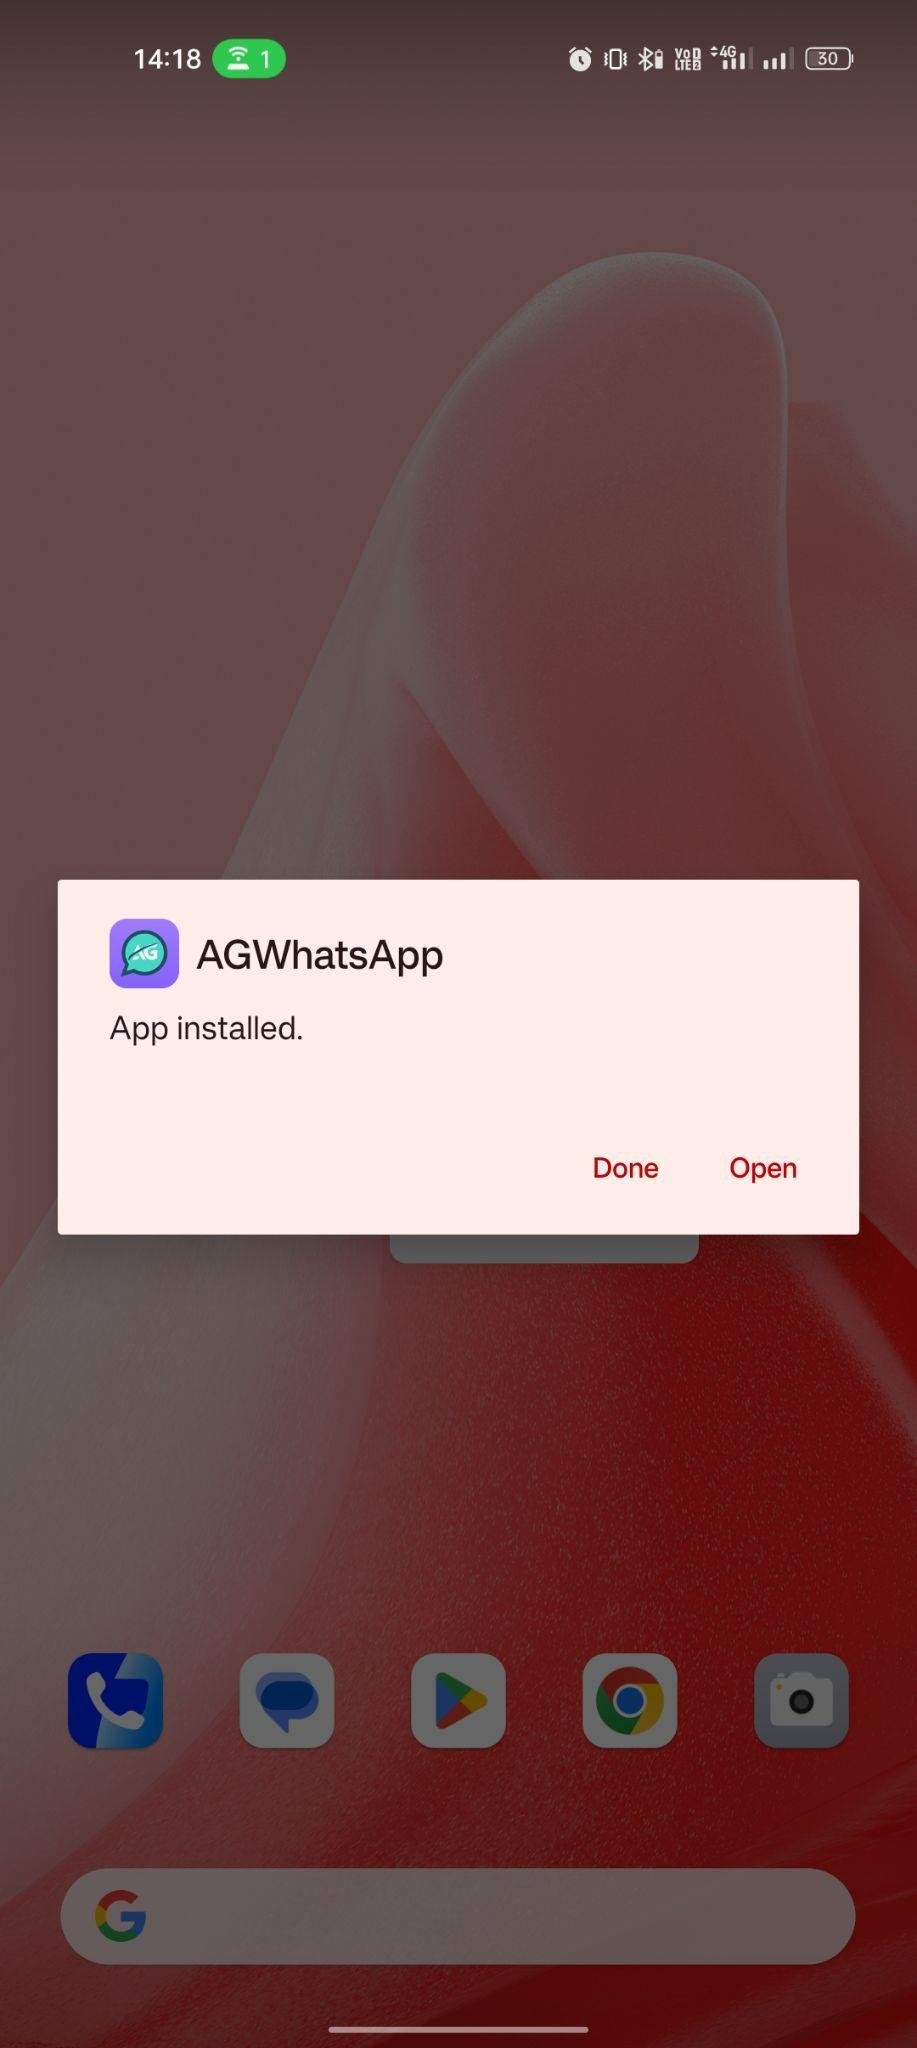 AGWhatsApp apk installed